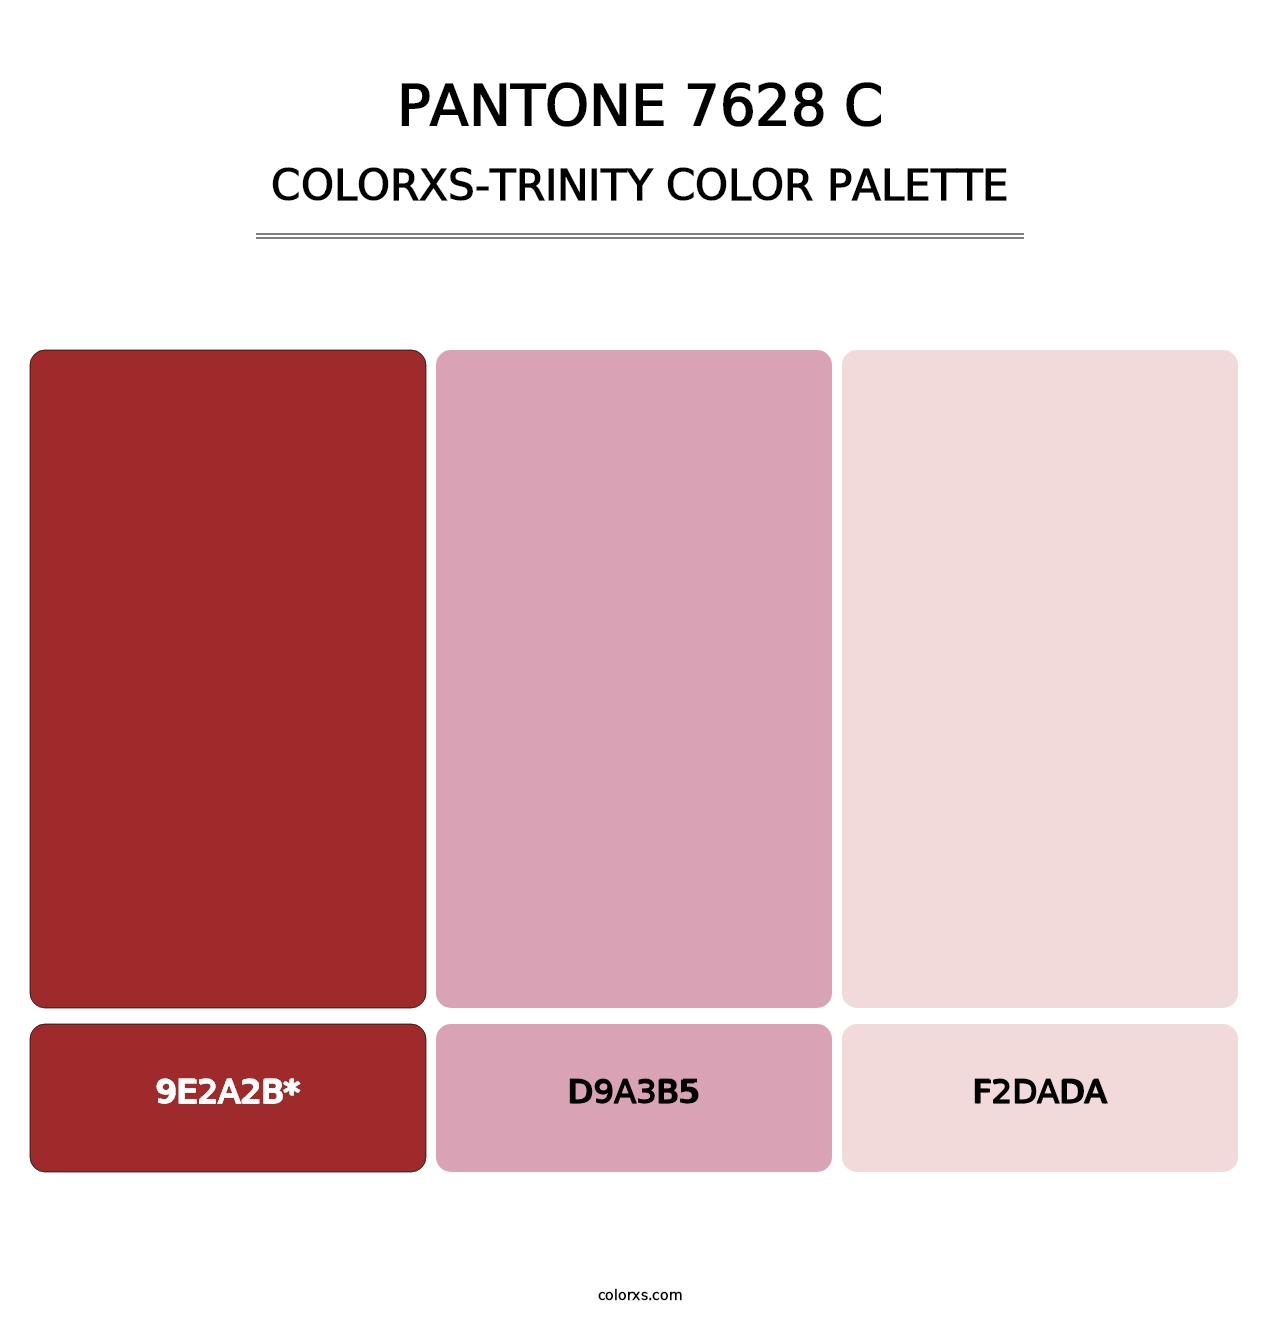 PANTONE 7628 C - Colorxs Trinity Palette